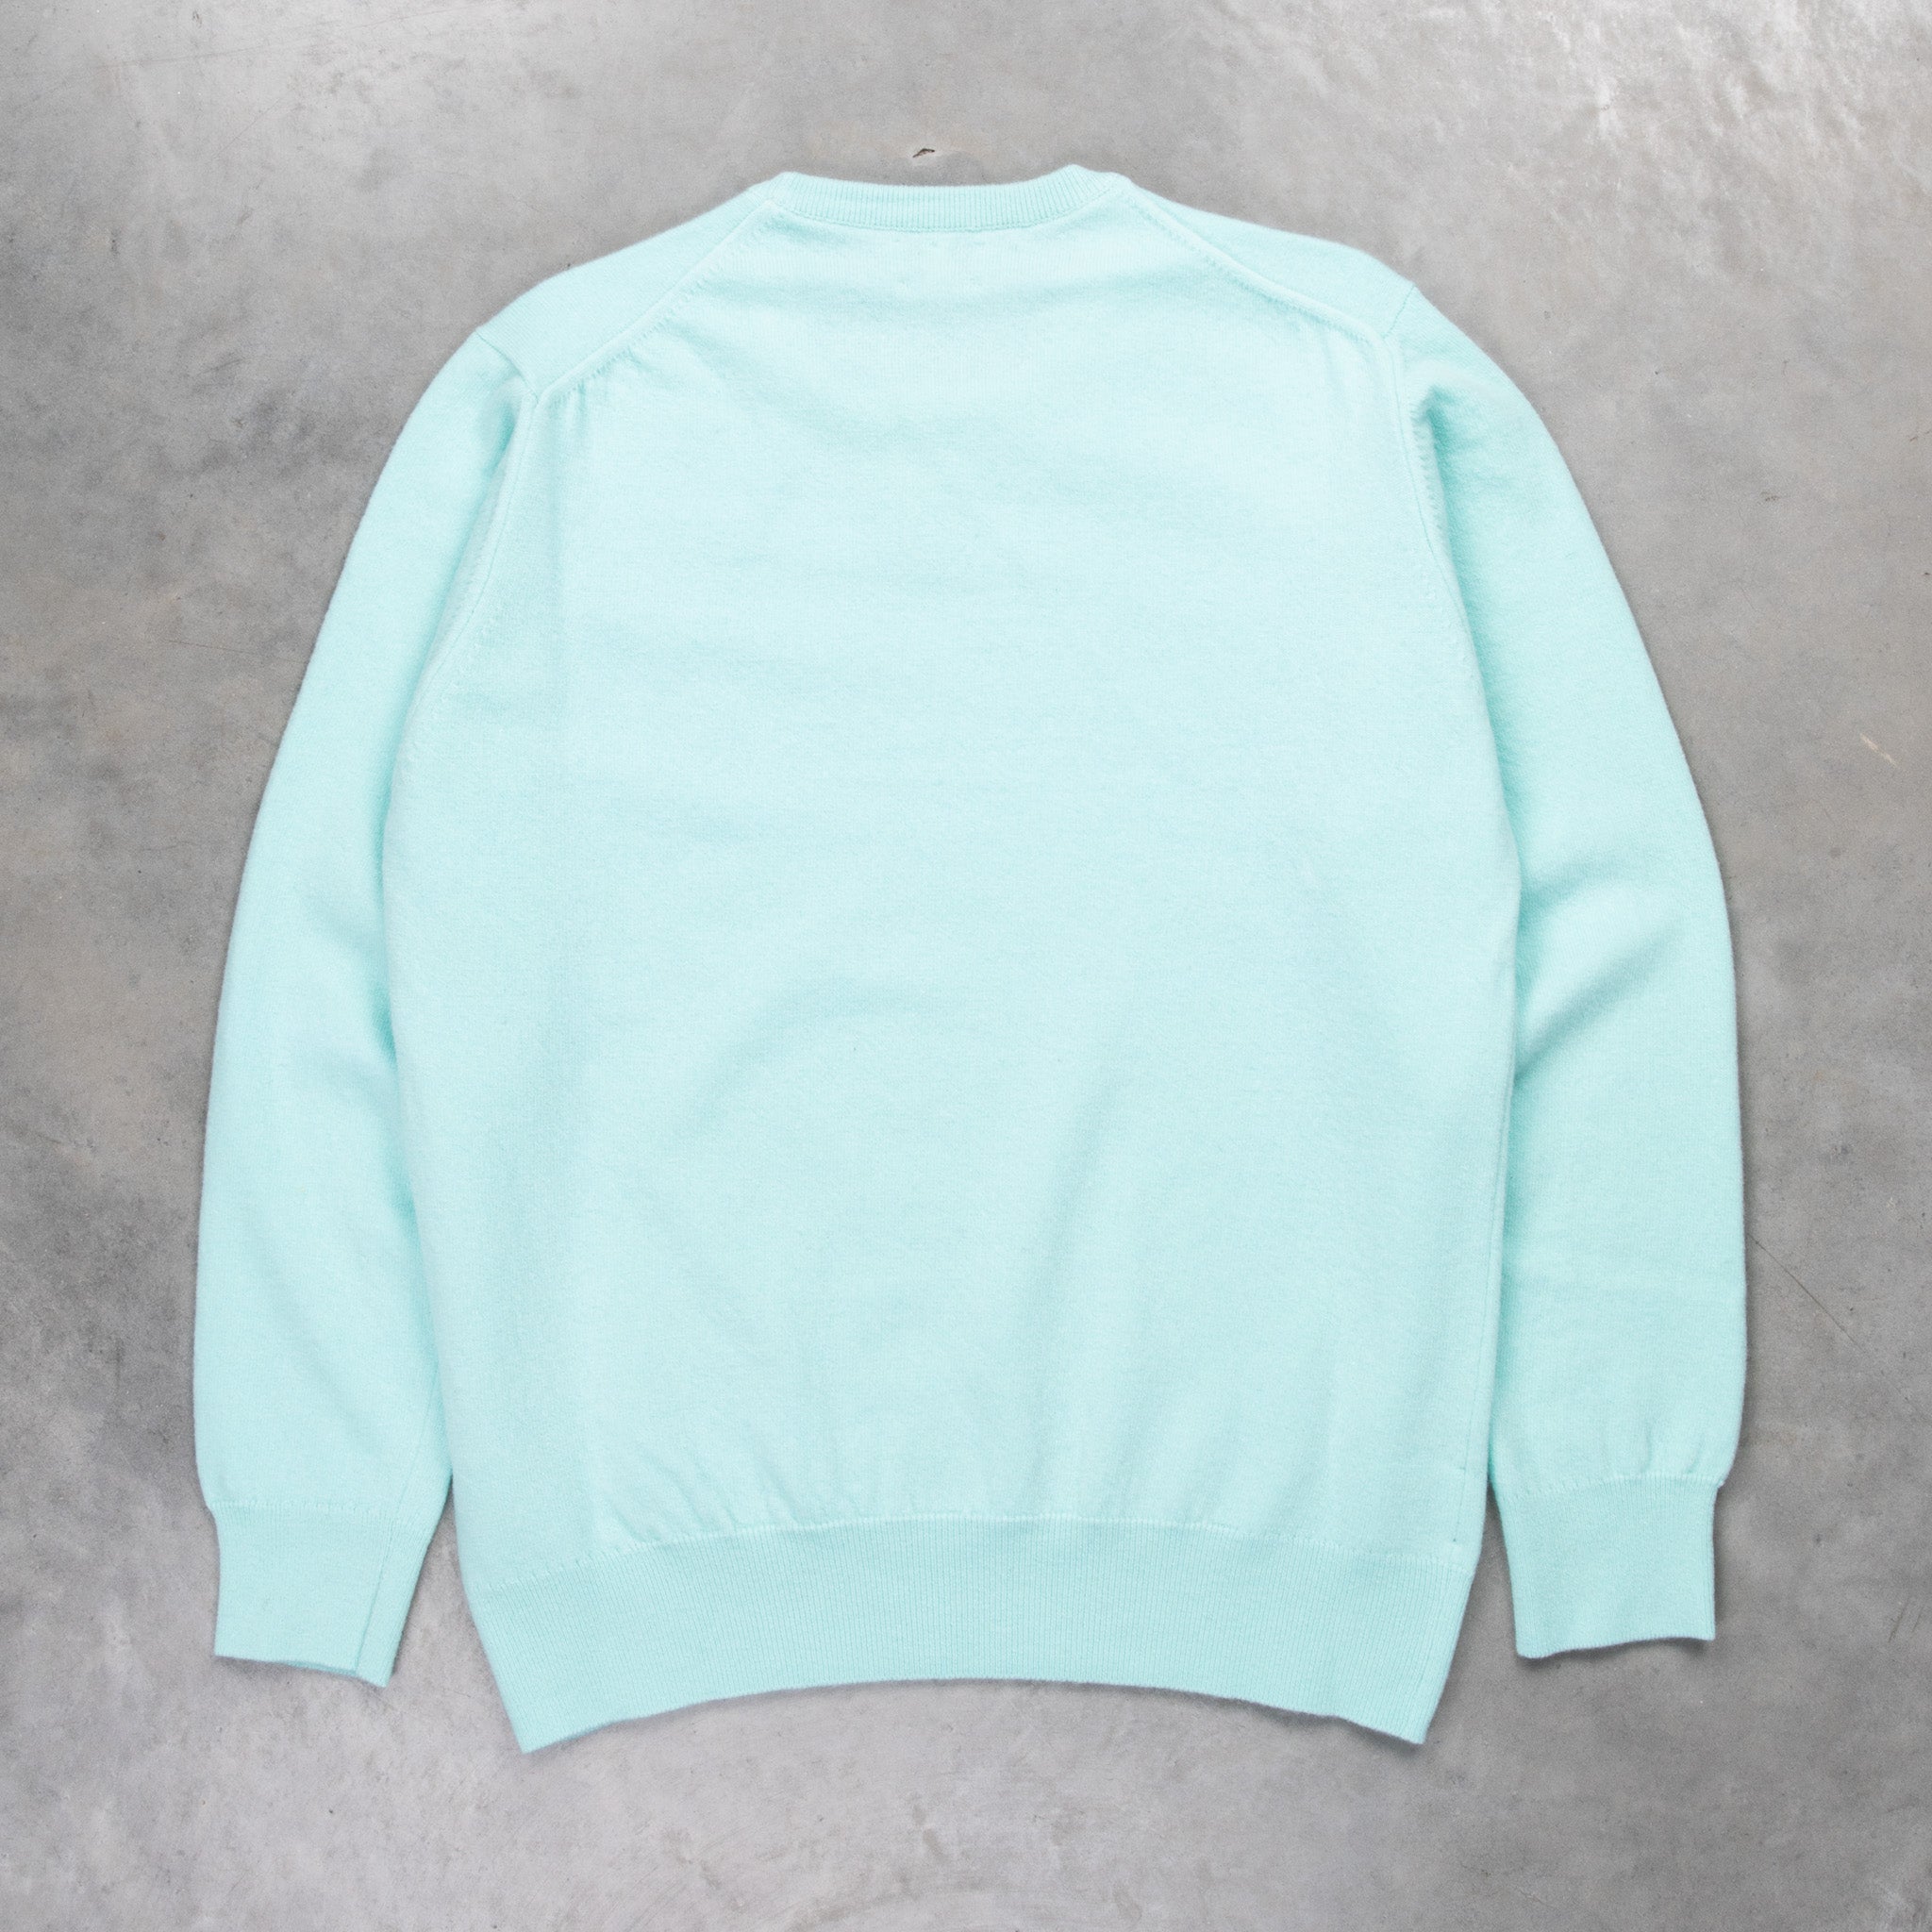 William Lockie x Frans Boone Super Geelong Vintage fit sweater Cambridge